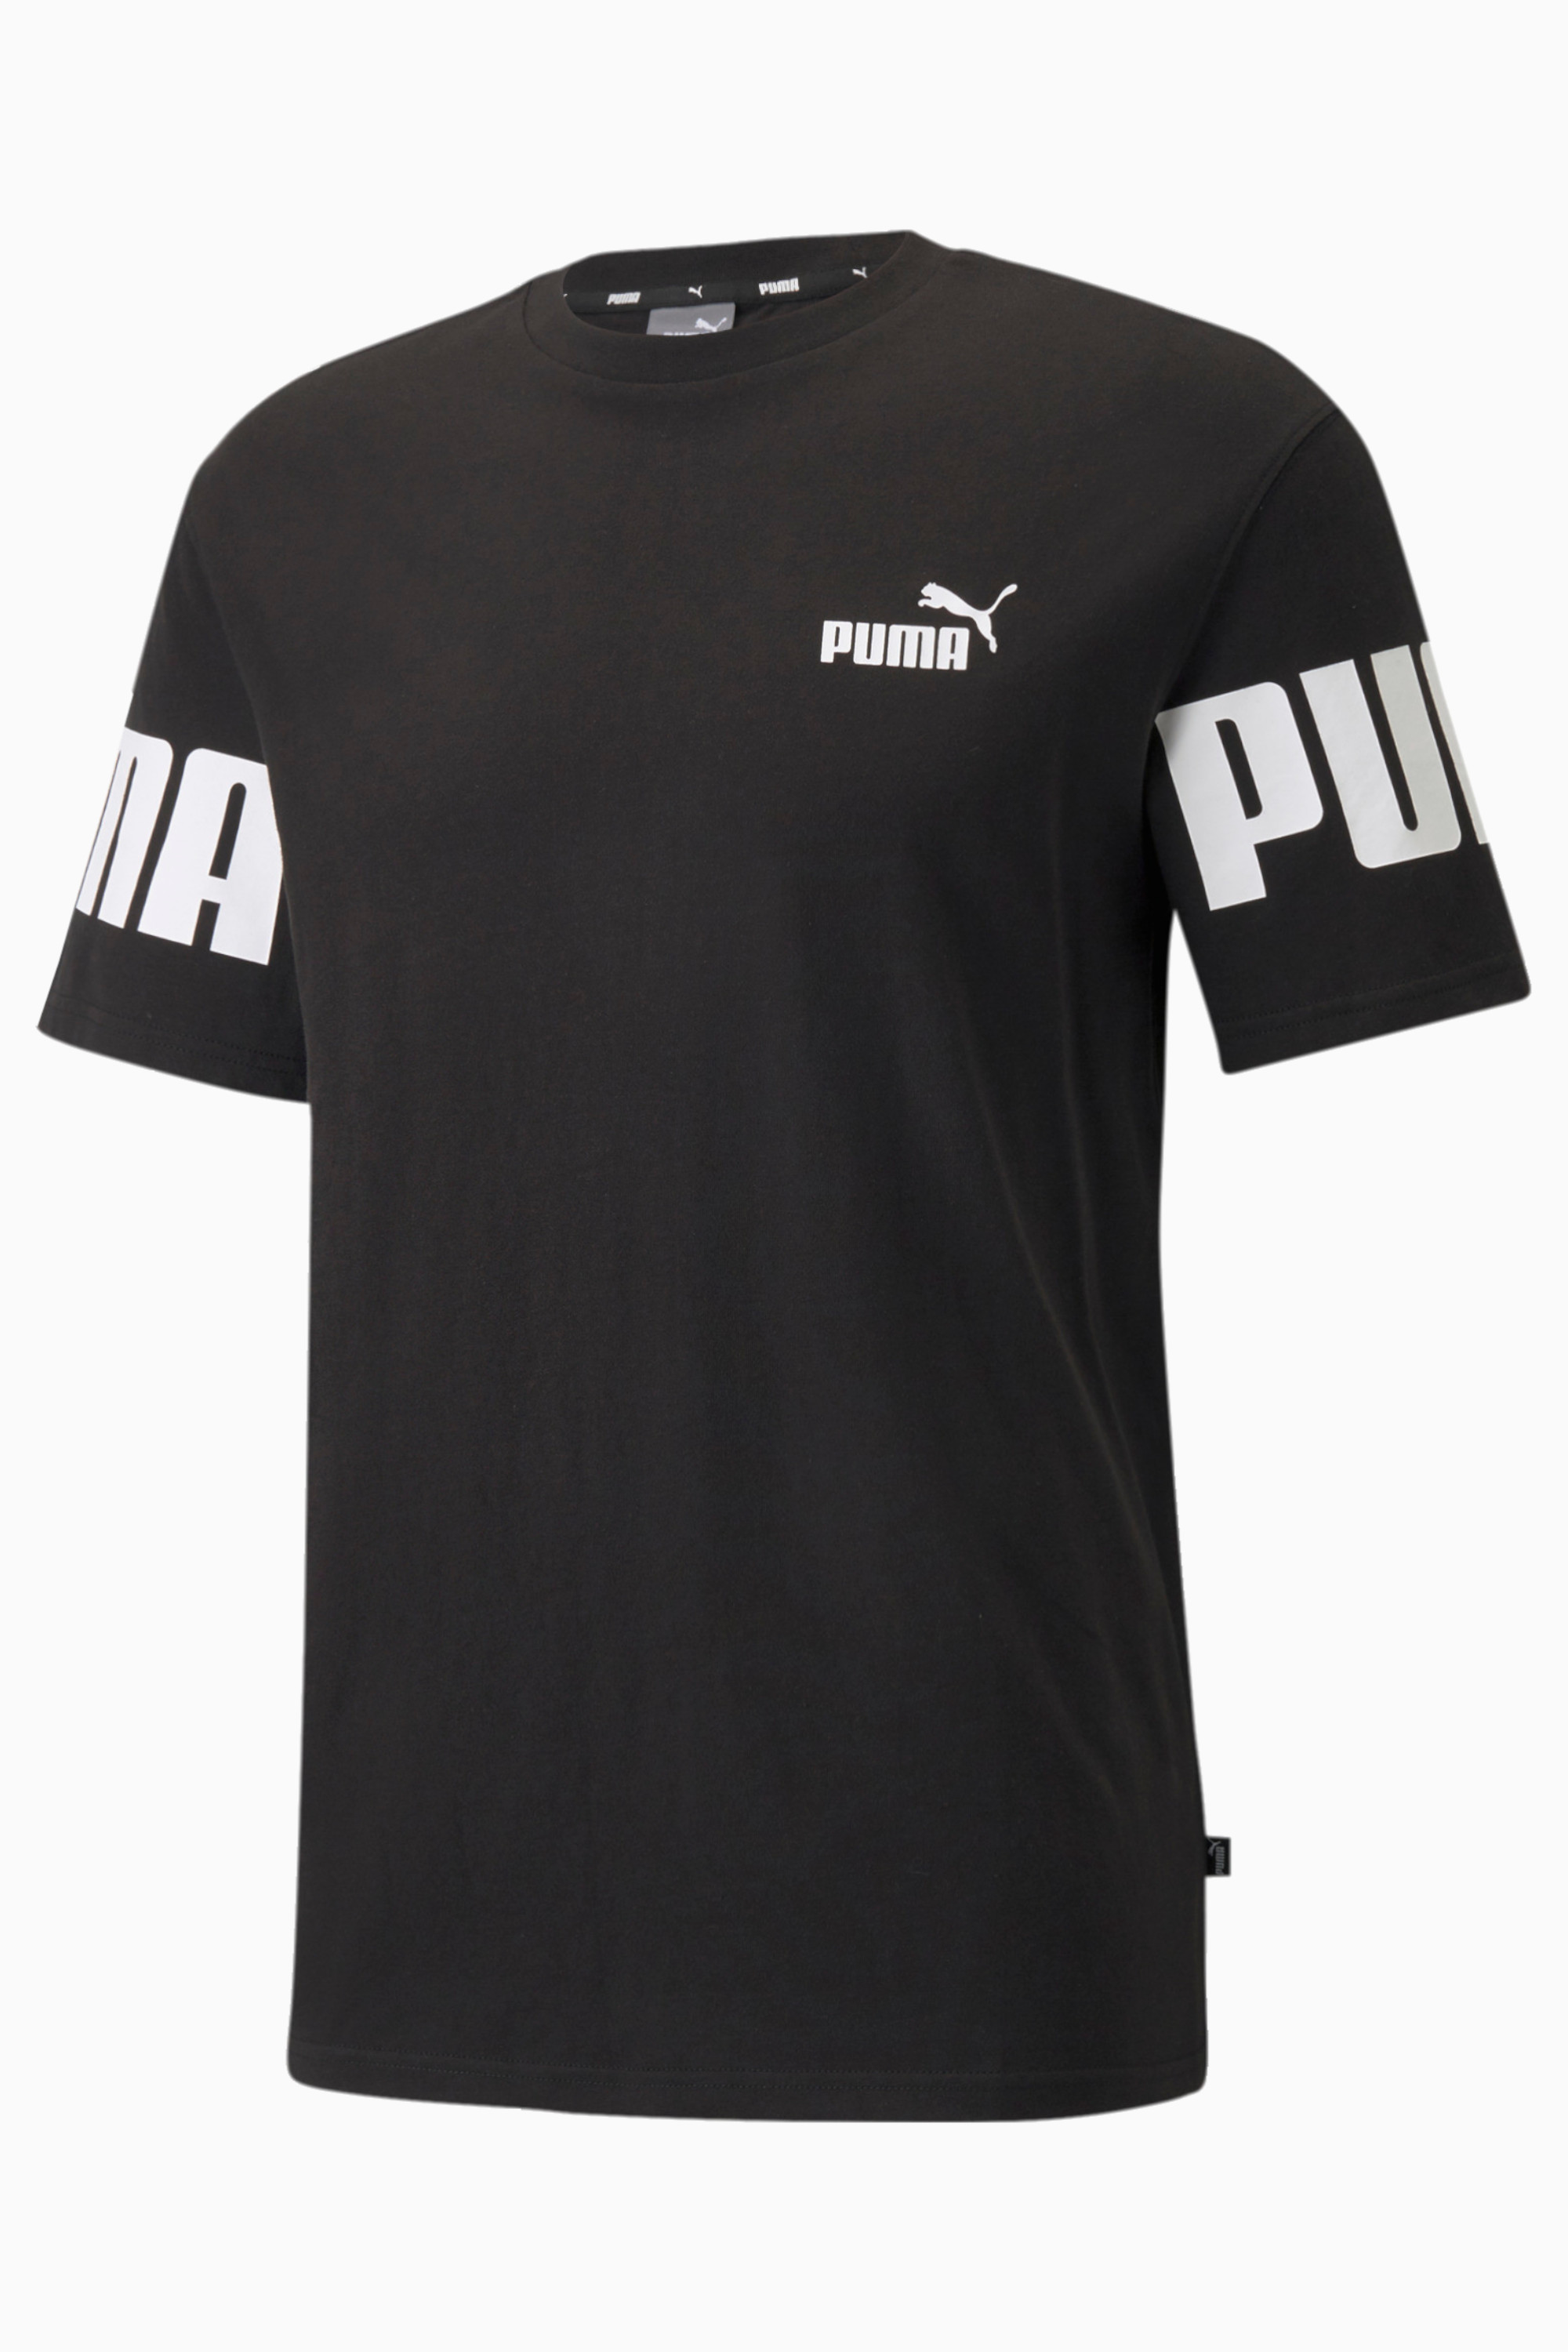 Tee R-GOL.com | Colorblock - Puma equipment & boots Power T-Shirt Football